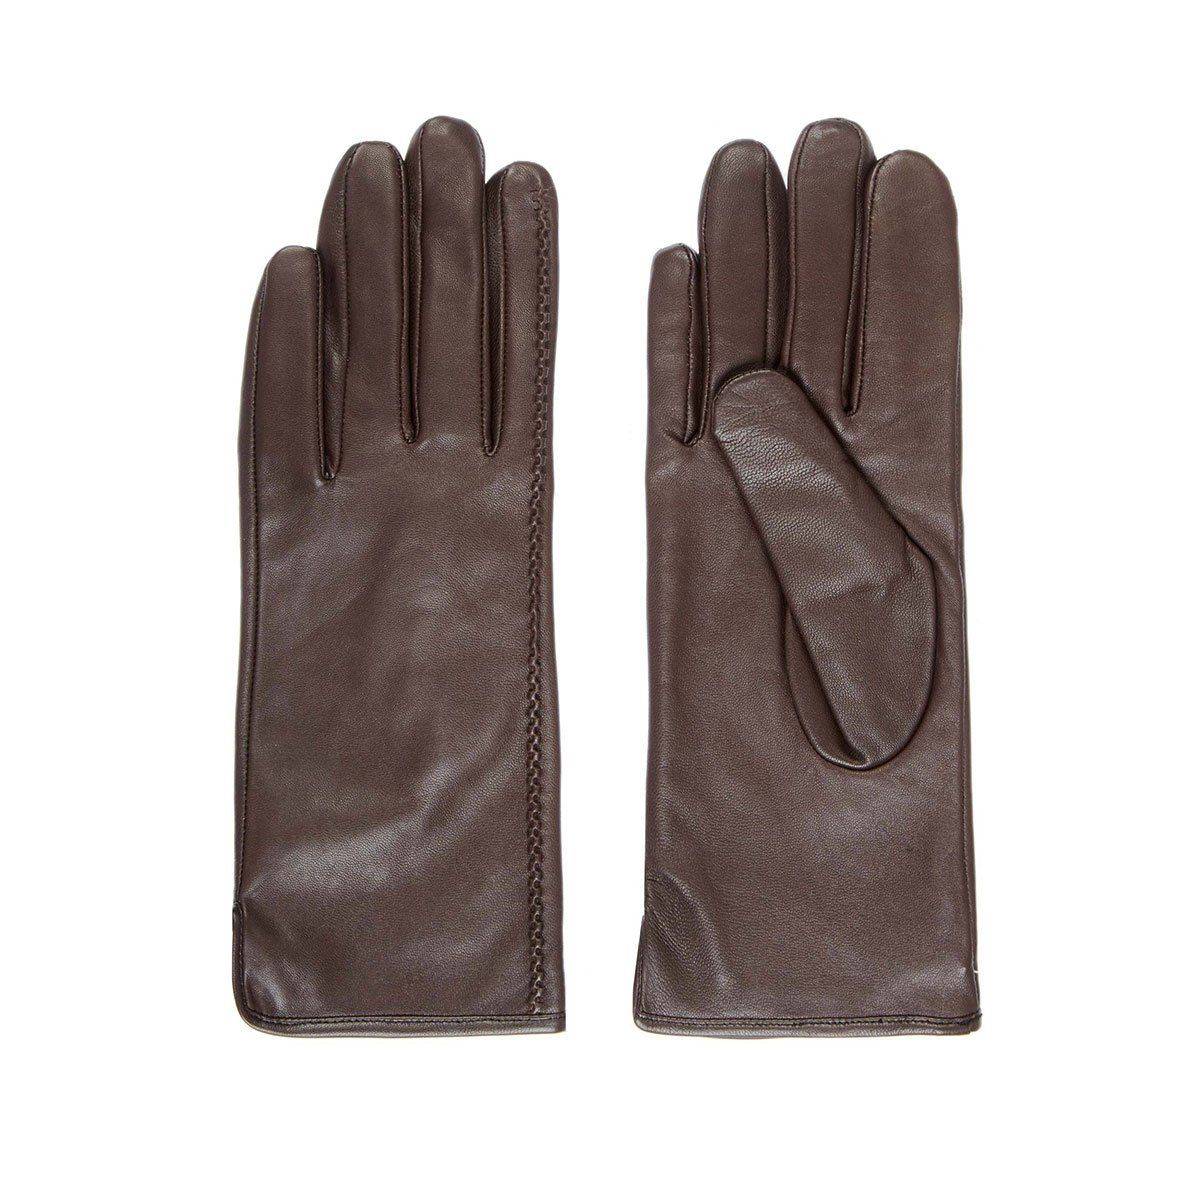 Перчатки EMU Australia ACCE - Accessories Moranbah Gloves W7006, цвет коричневый, размер M/L - фото 1